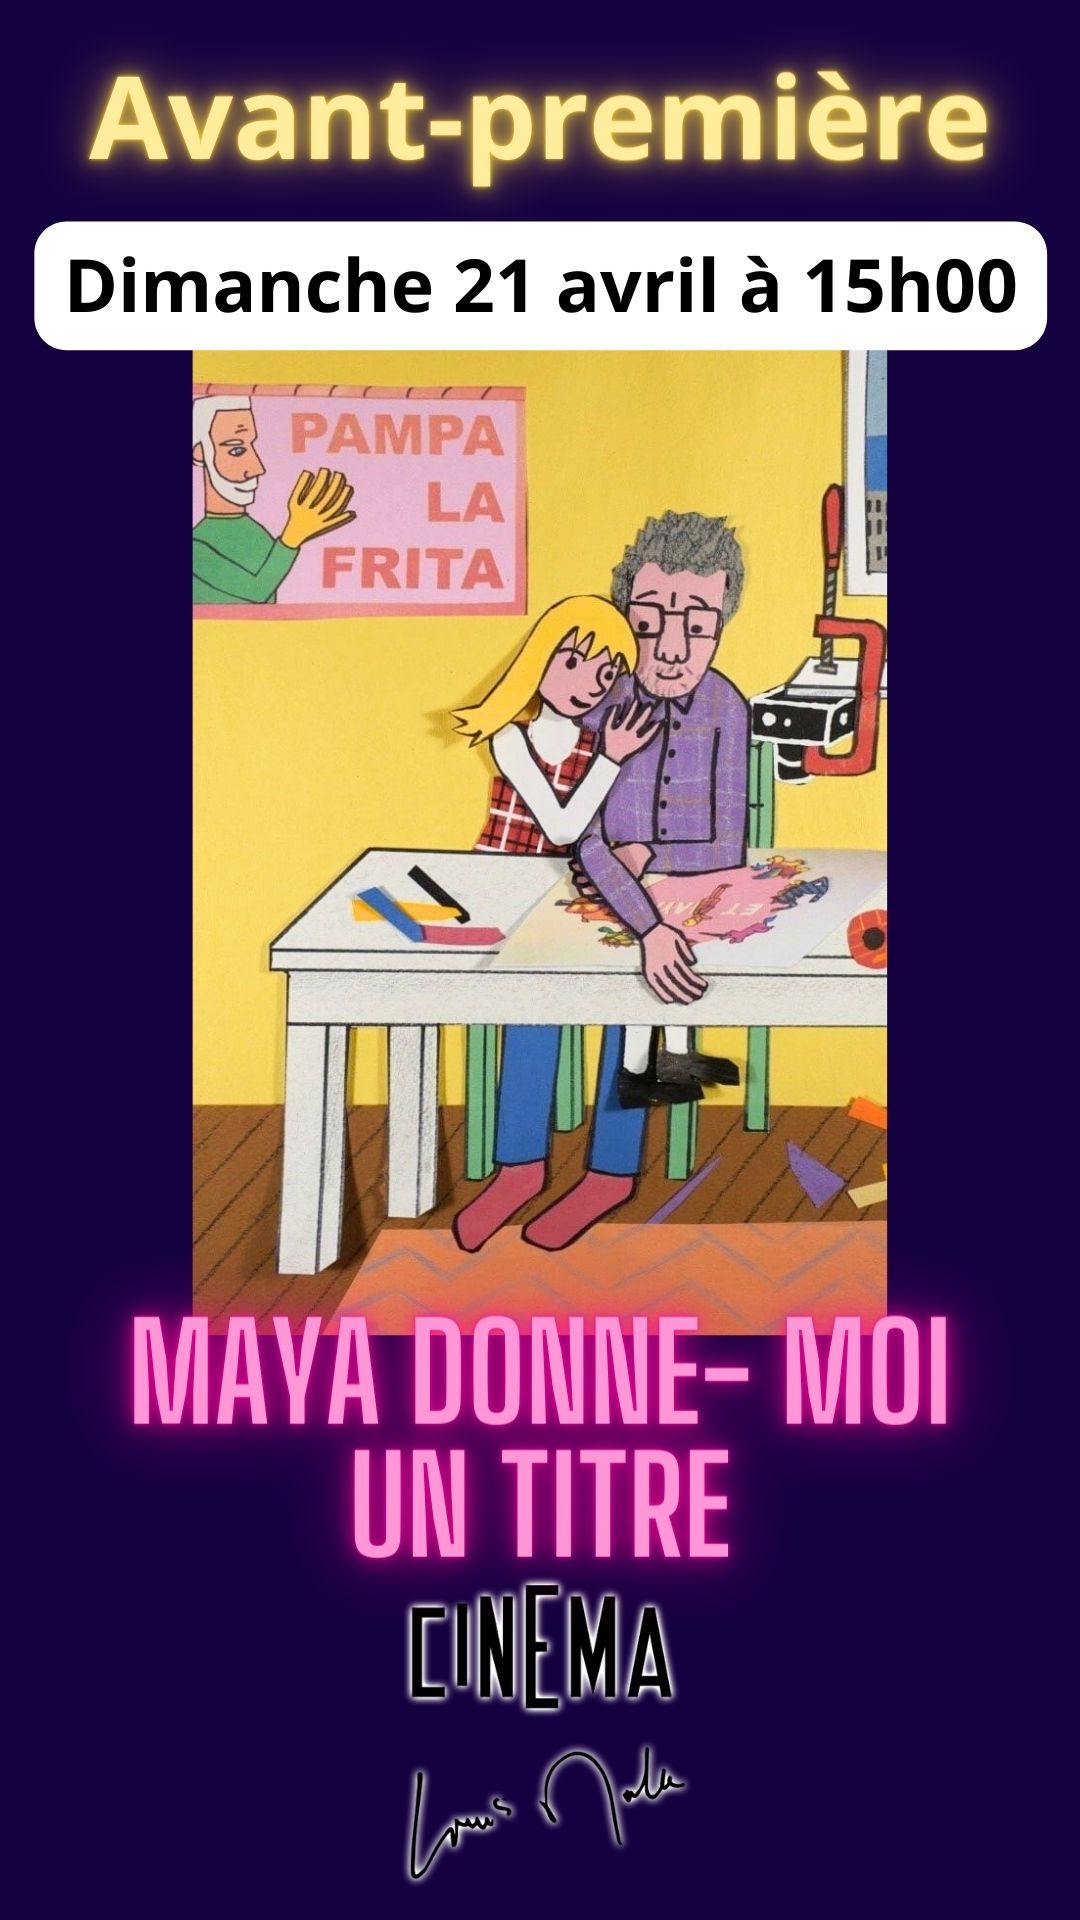 Ciné-avant-première "Maya Donne Moi Un Titre" null France null null null null